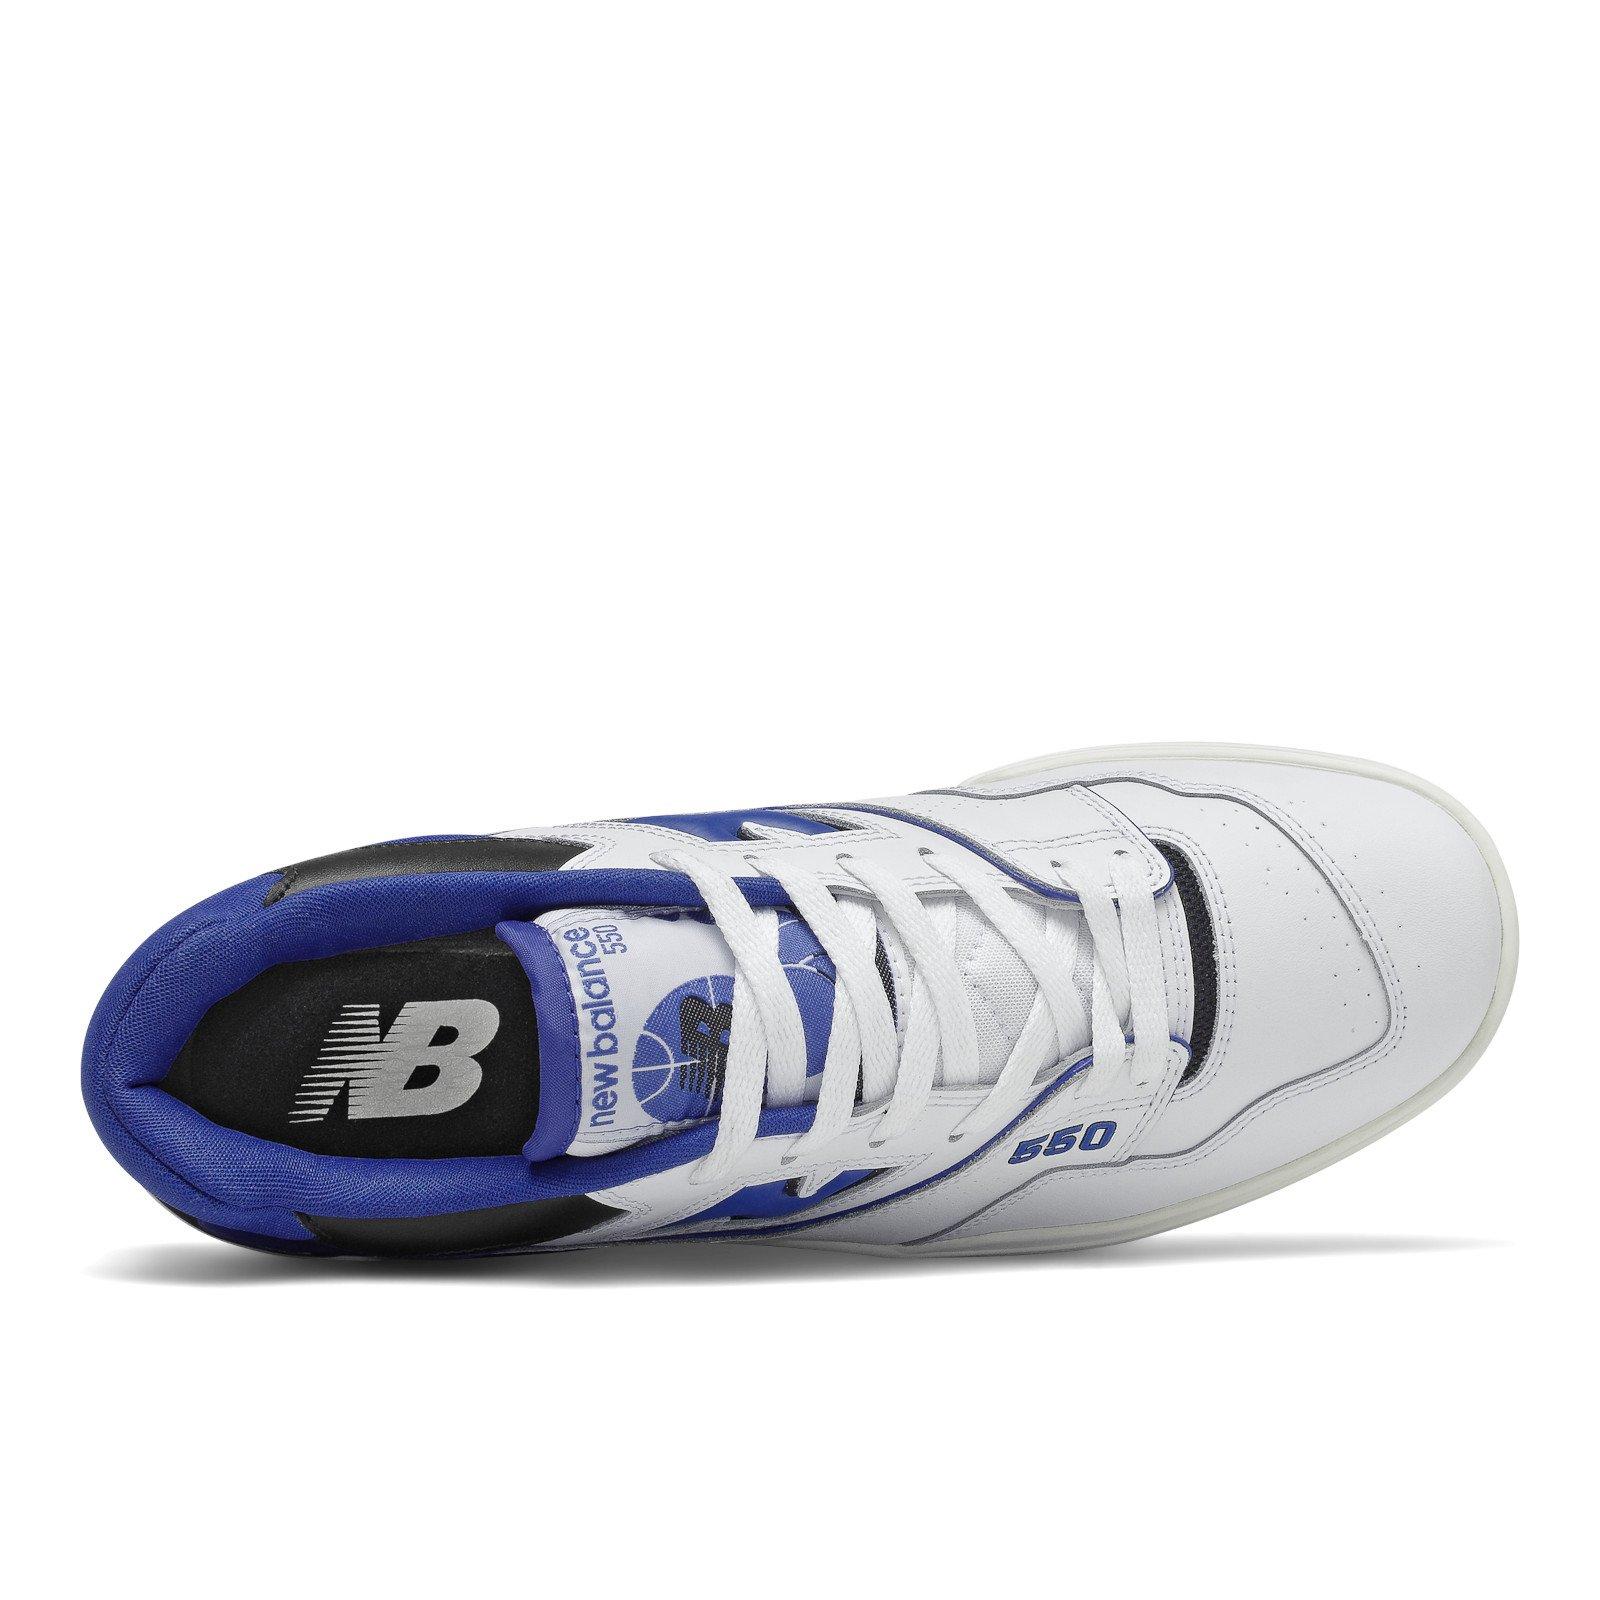 New Balance 550 White/Green Men's Shoe - Hibbett